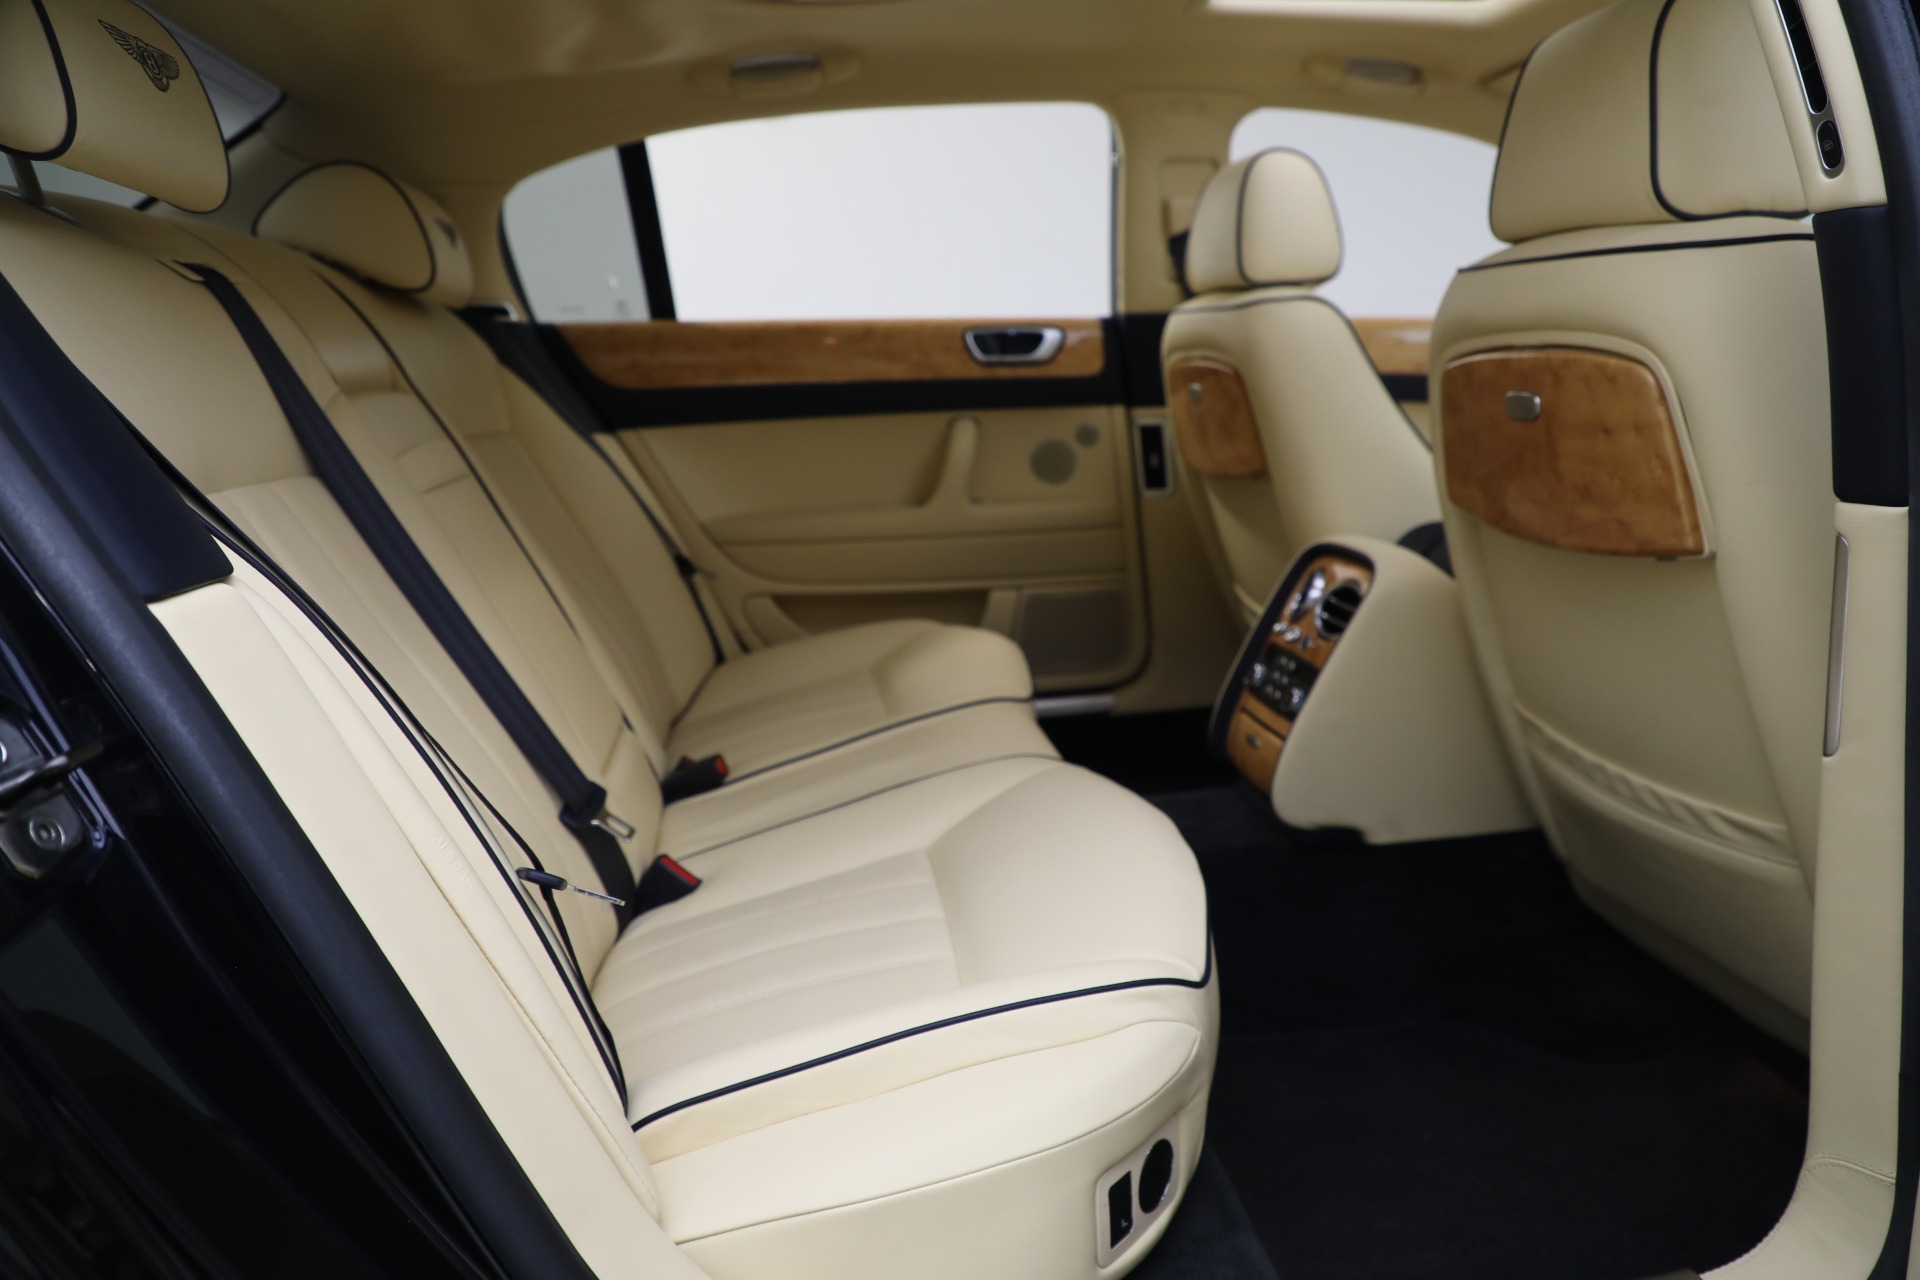 Bentley Continental Flying Spur interior - Seats